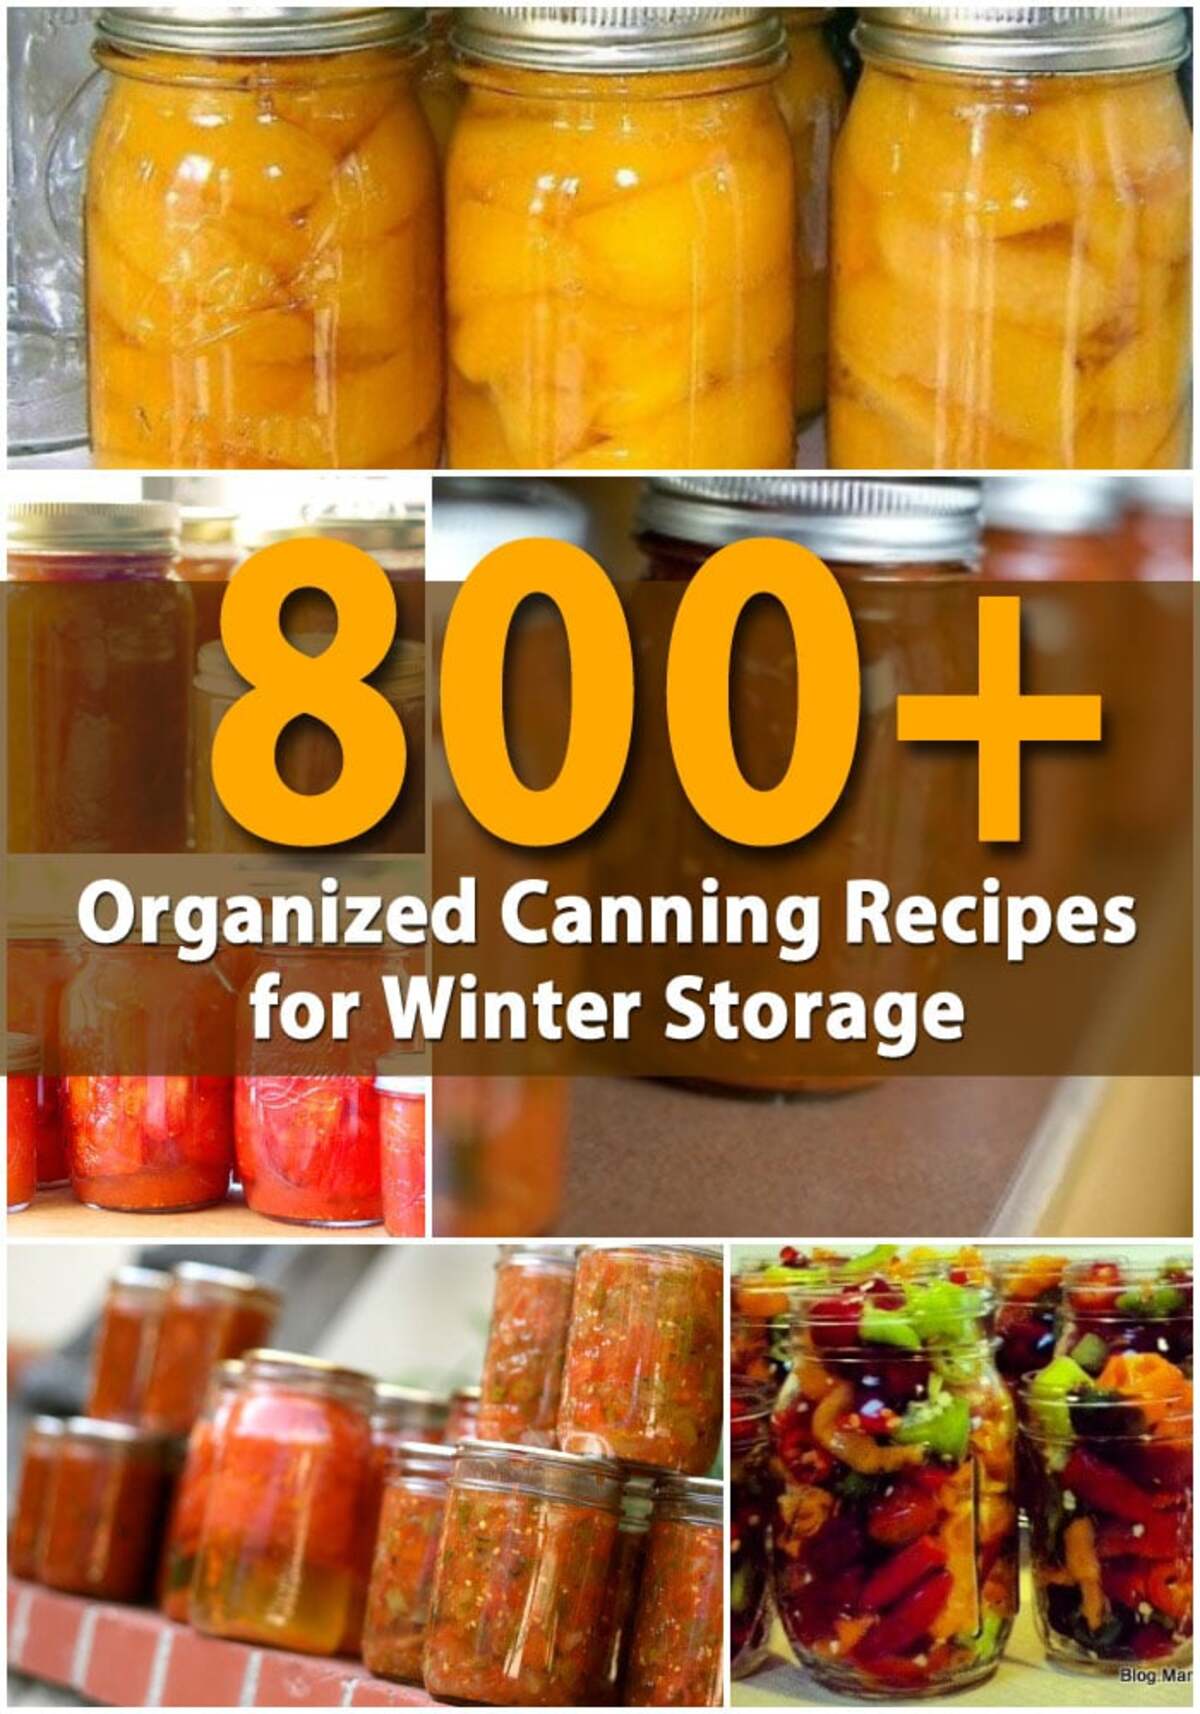 800+ Organized Canning Recipes for Winter Storage pitnerest image.